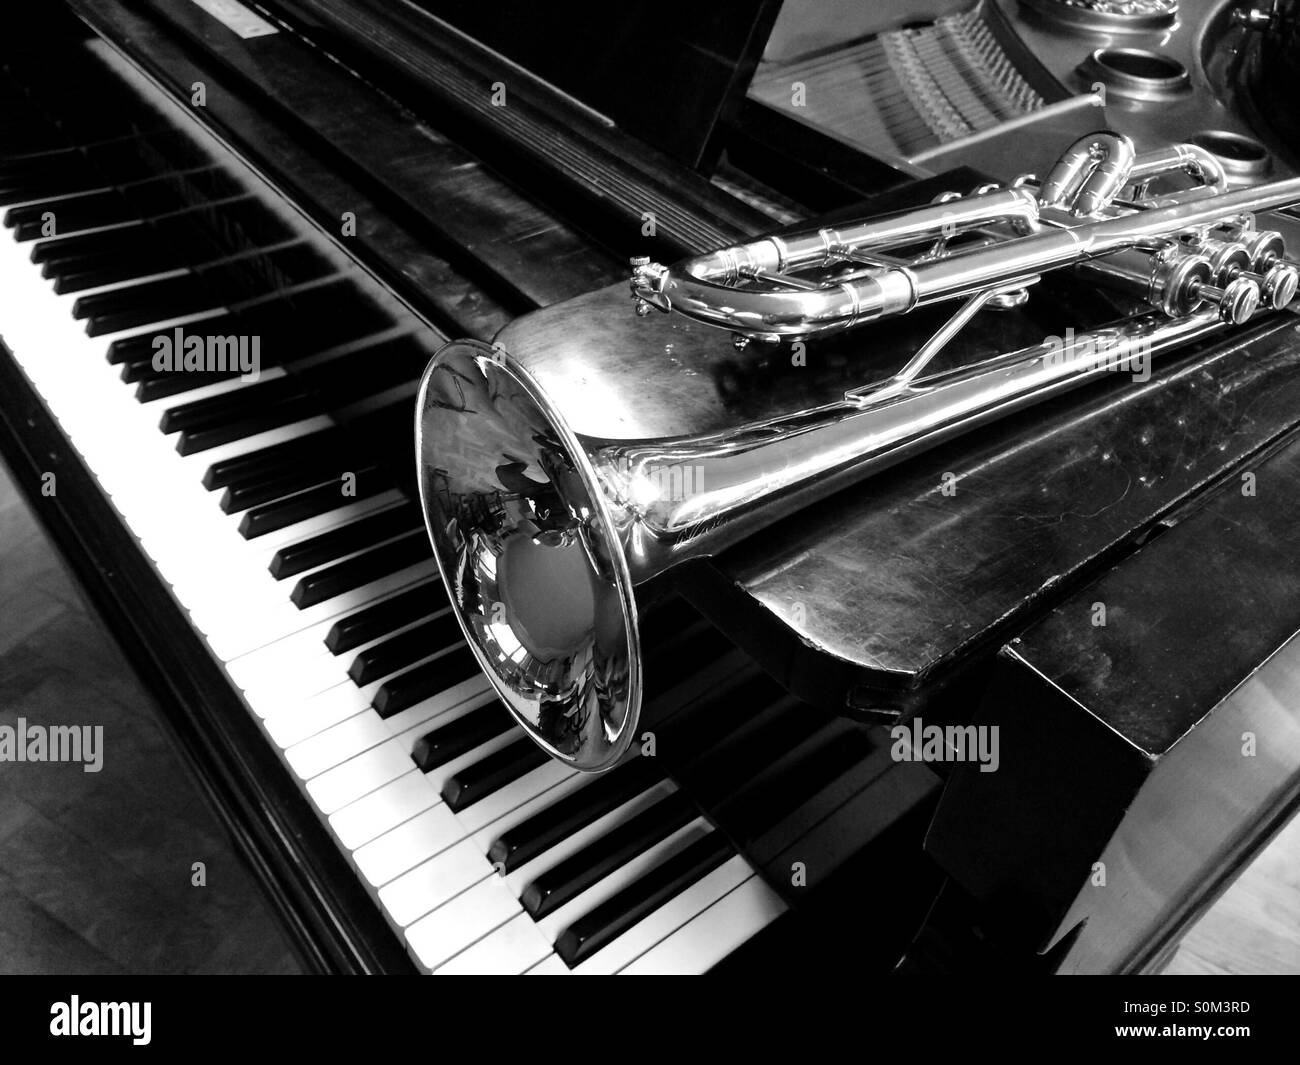 Jazzmusic - tromba e pianoforte Foto stock - Alamy